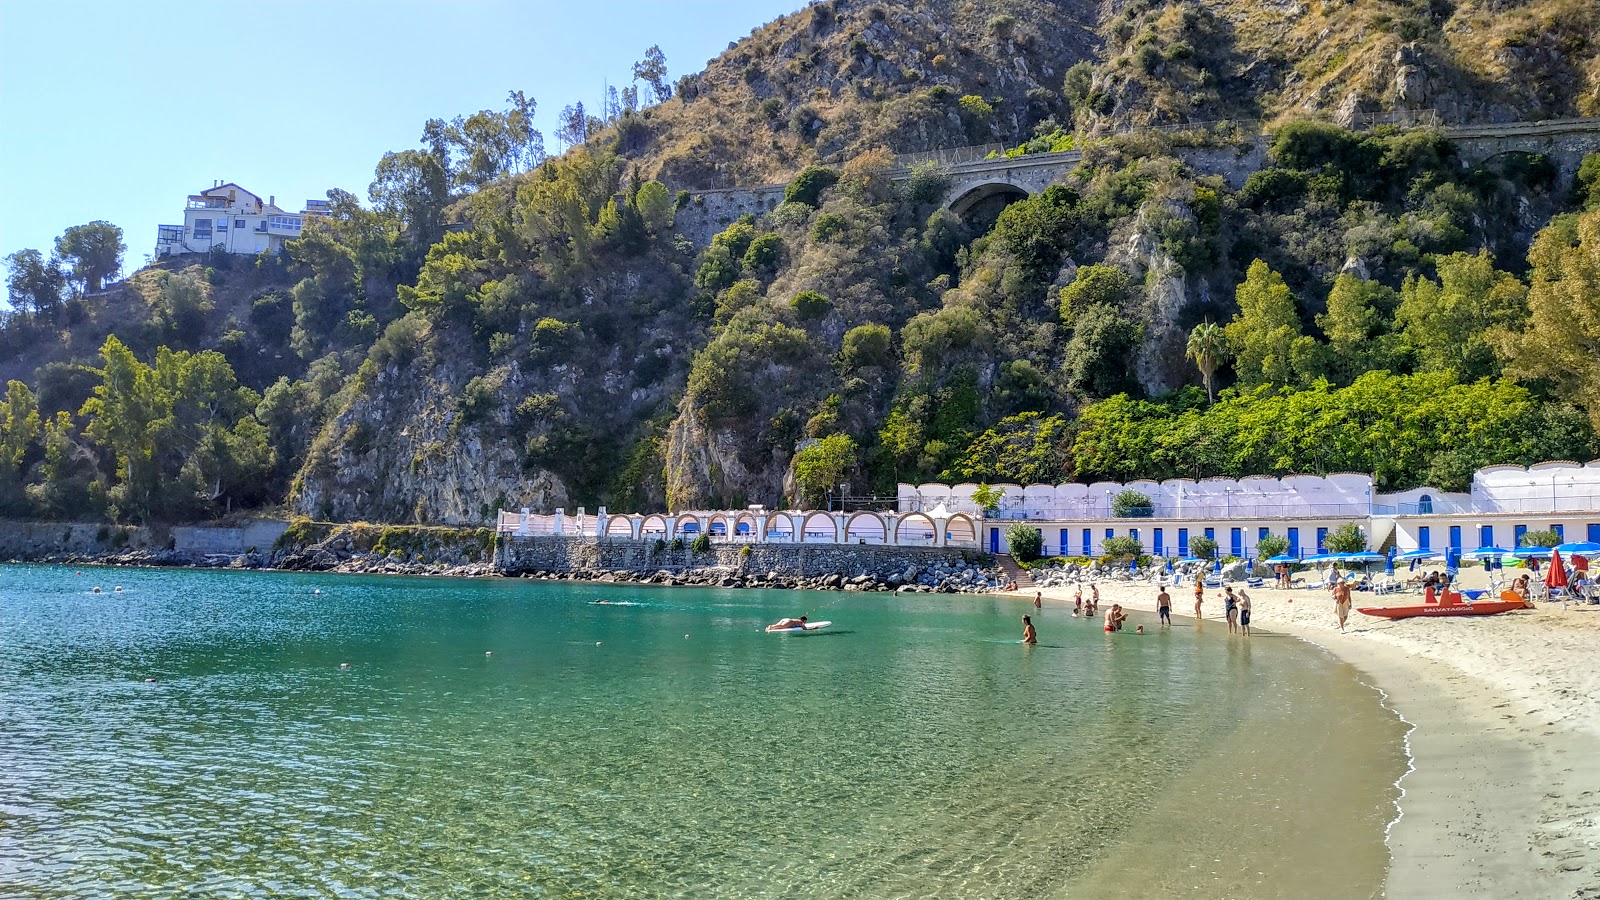 Fotografija Spiaggia di Copanello z modra voda površino